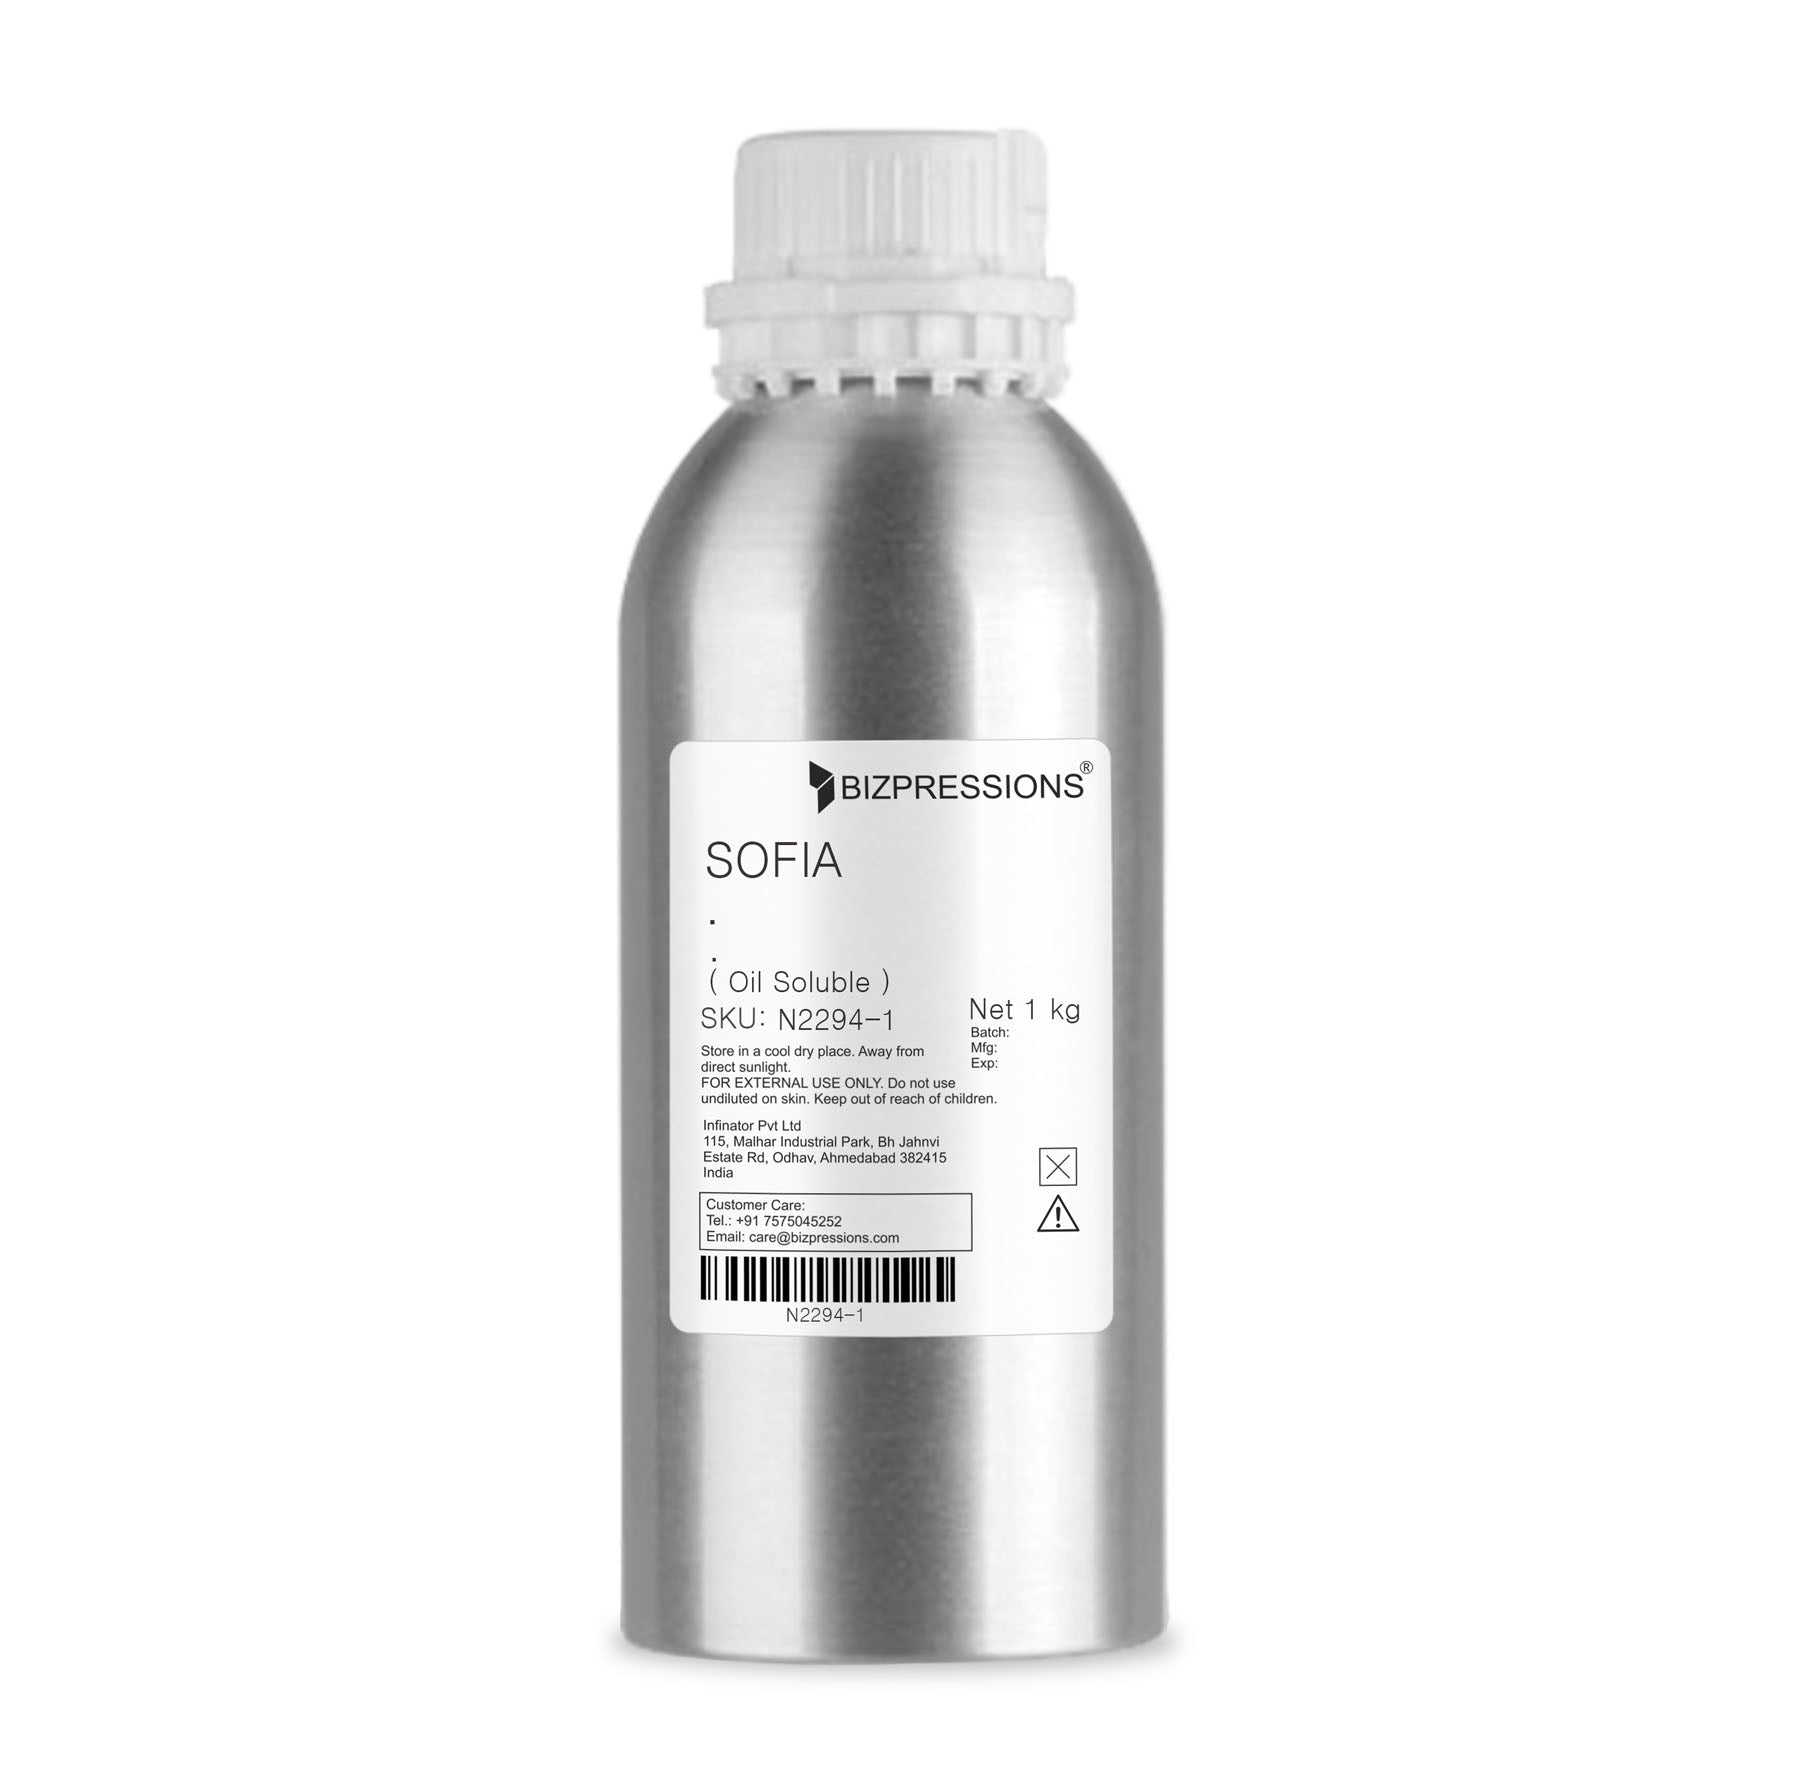 SOFIA - Fragrance ( Oil Soluble ) - 1 kg